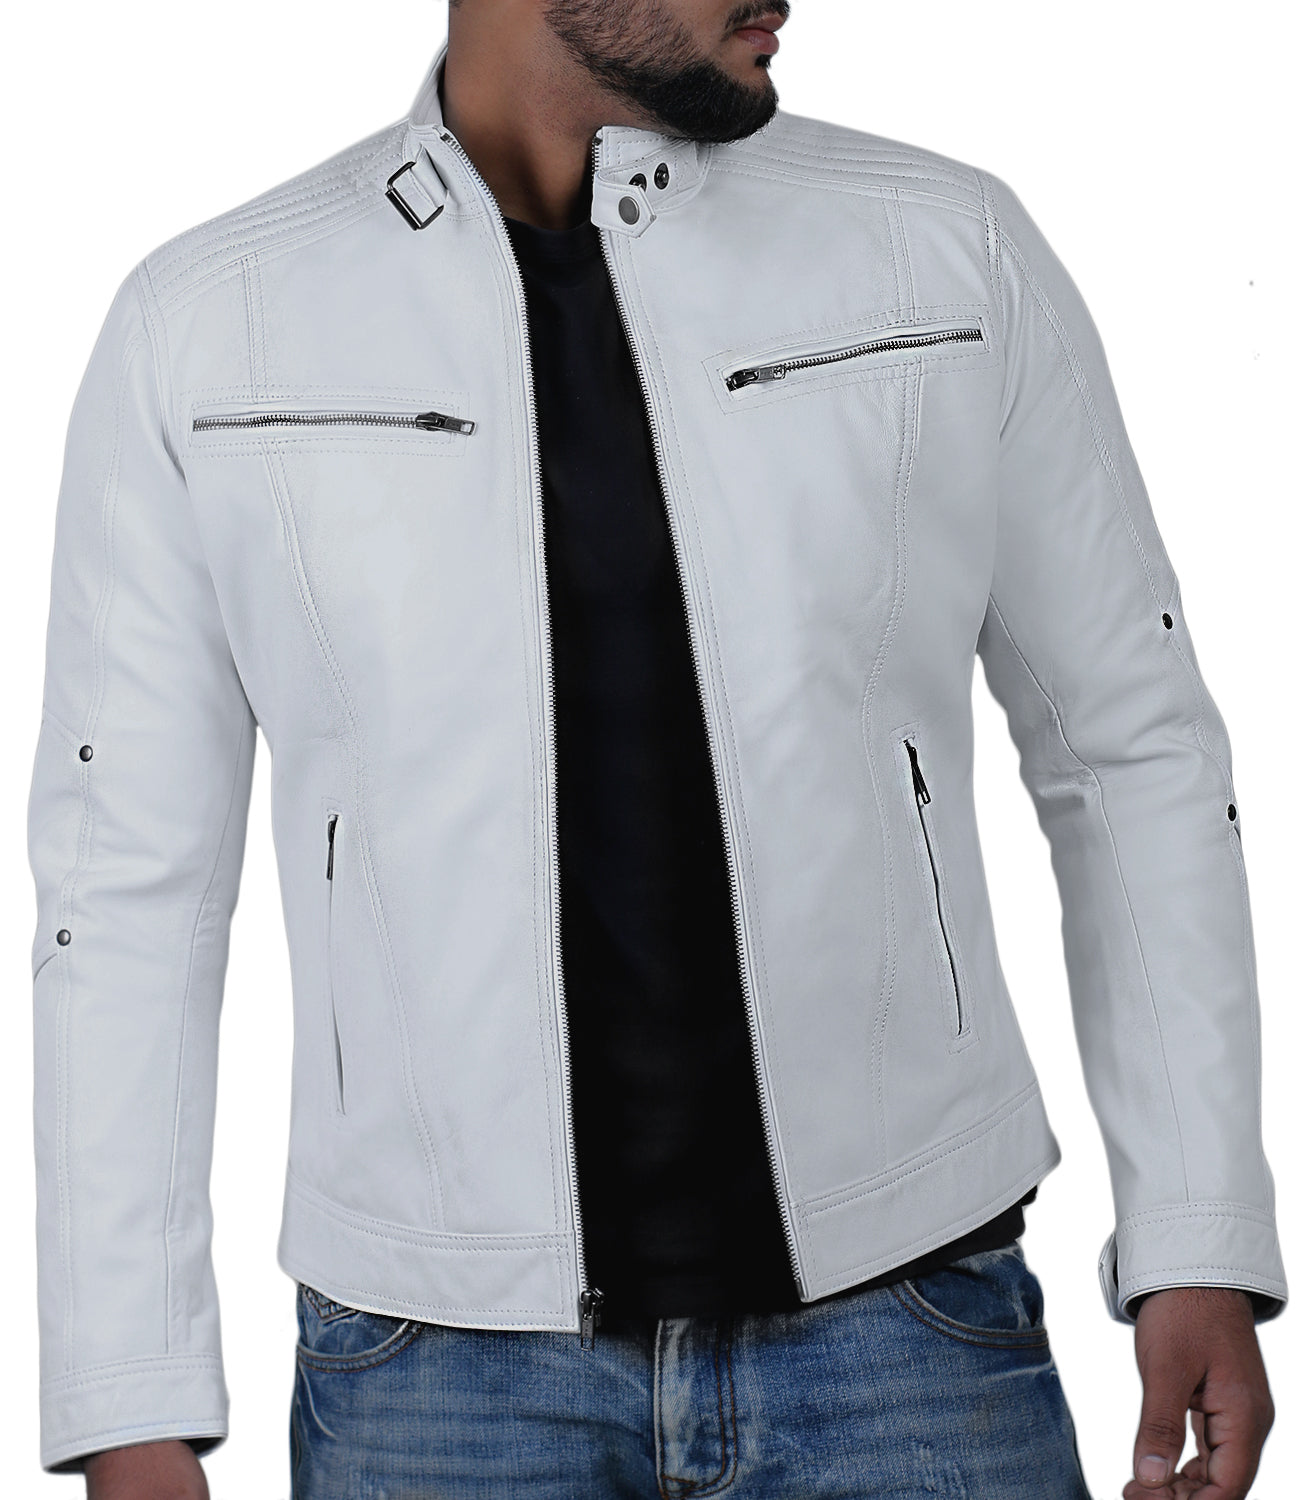 Leather Jackets Hub Mens Genuine Lambskin Leather Jacket (Black, Fencing Jacket) - 1501161